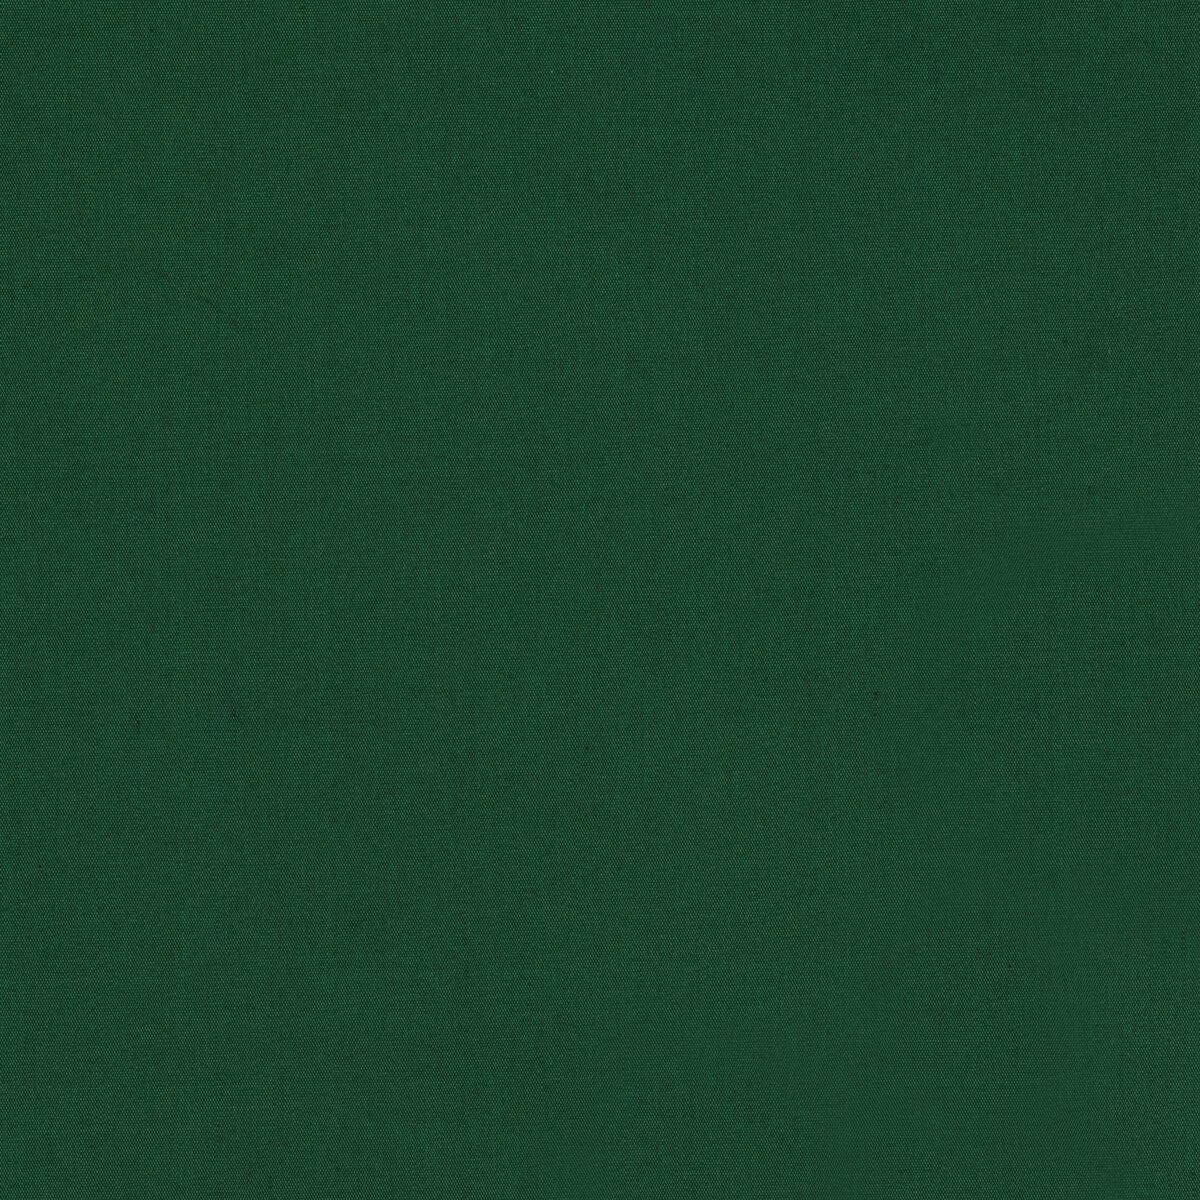 Ninon Taffetas fabric in emerald color - pattern BR-81081.53.0 - by Brunschwig &amp; Fils